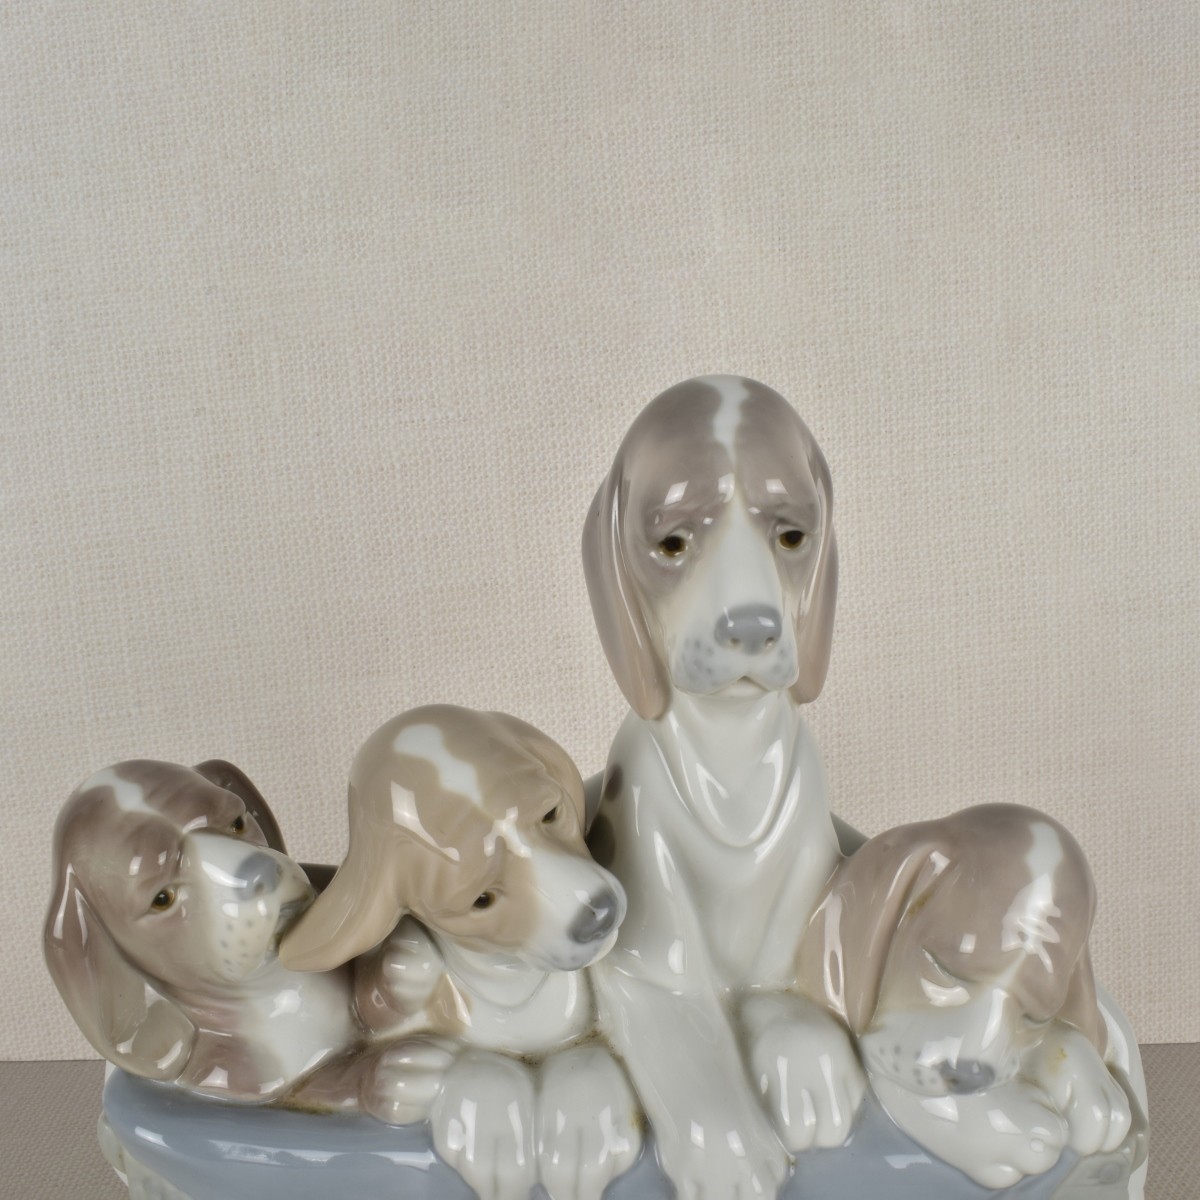 Lladro Figurine of Dogs